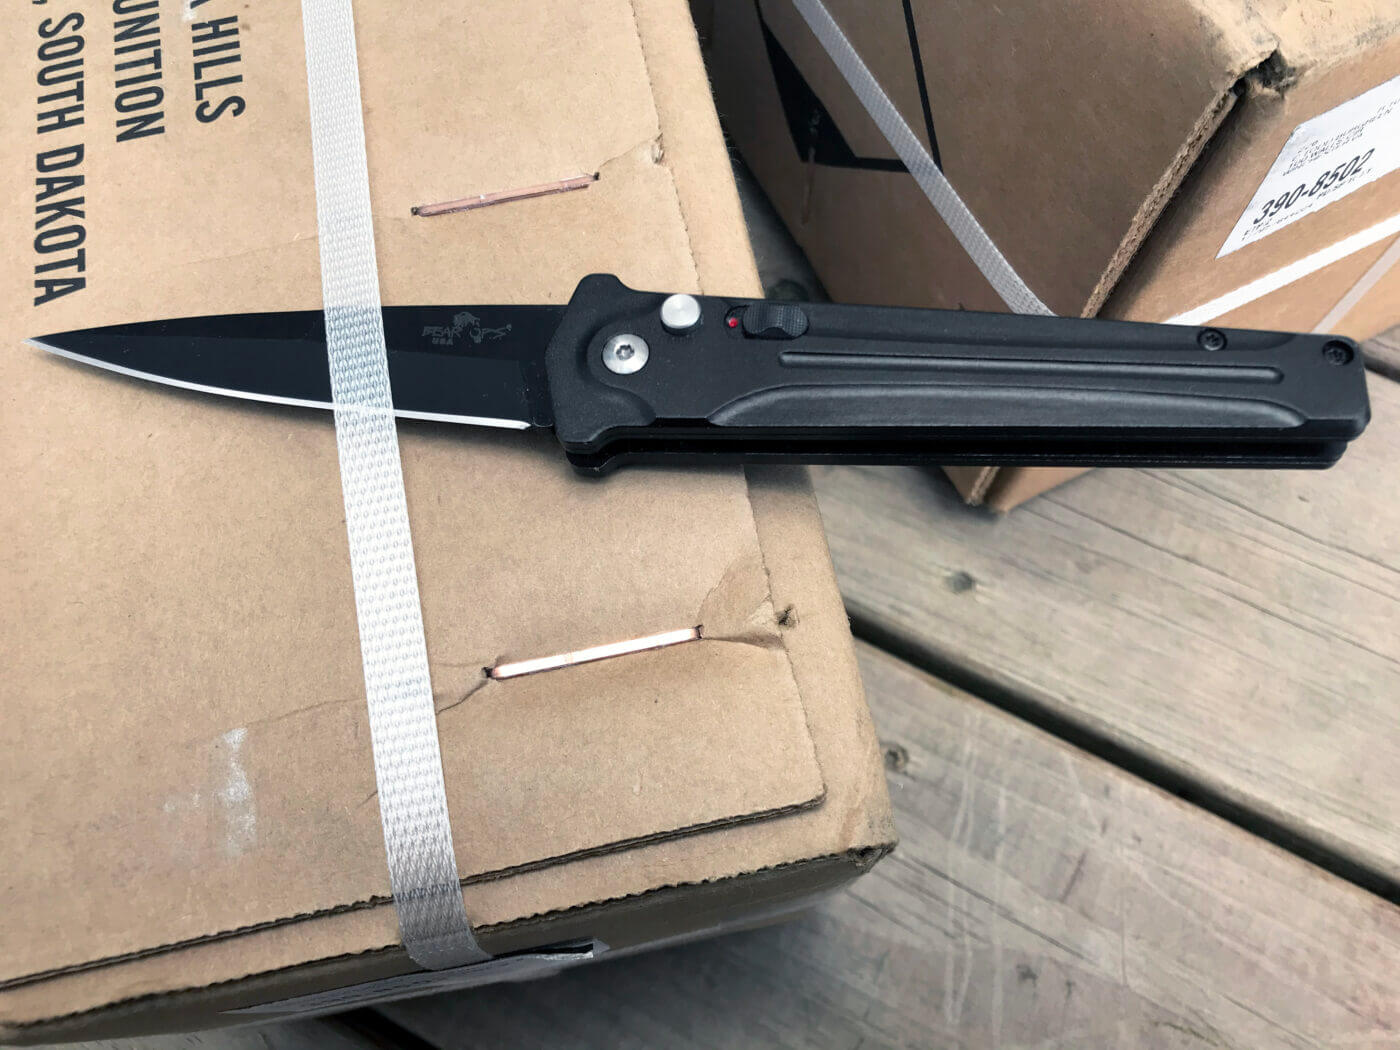 Knife testing on a box